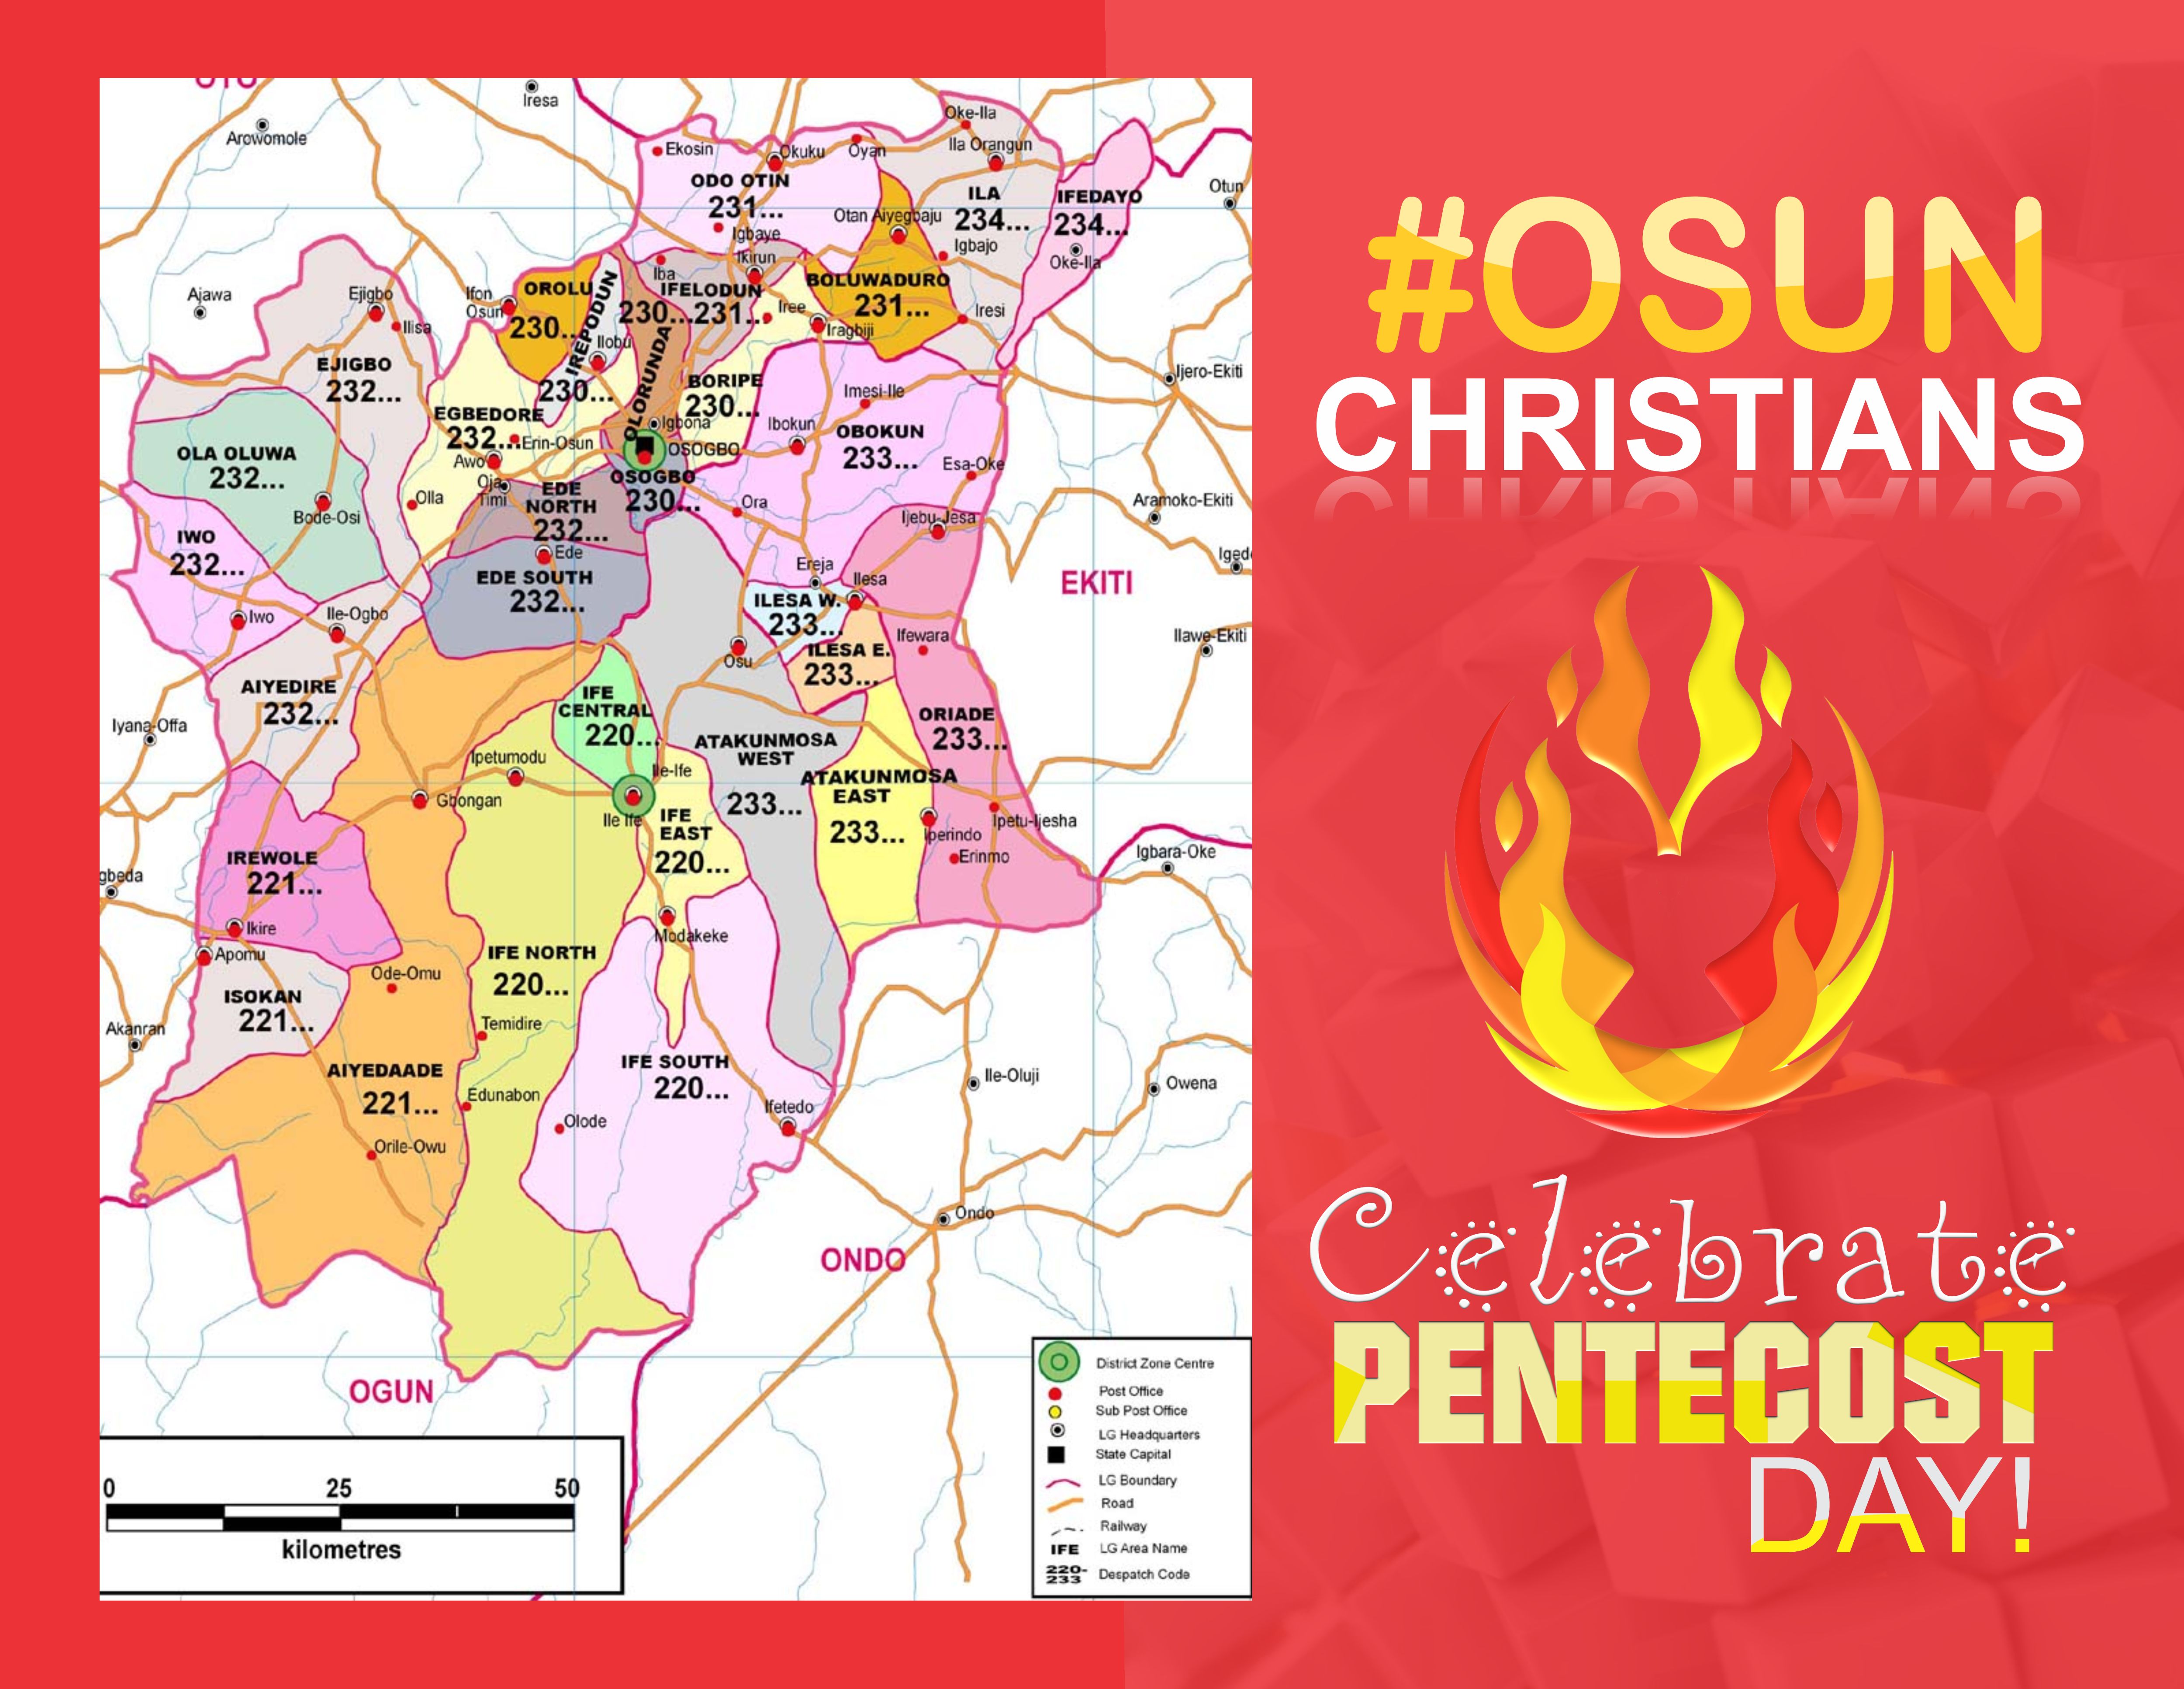 OSUN CHRISTIANS SET TO CELEBRATE PENTECOST DAY